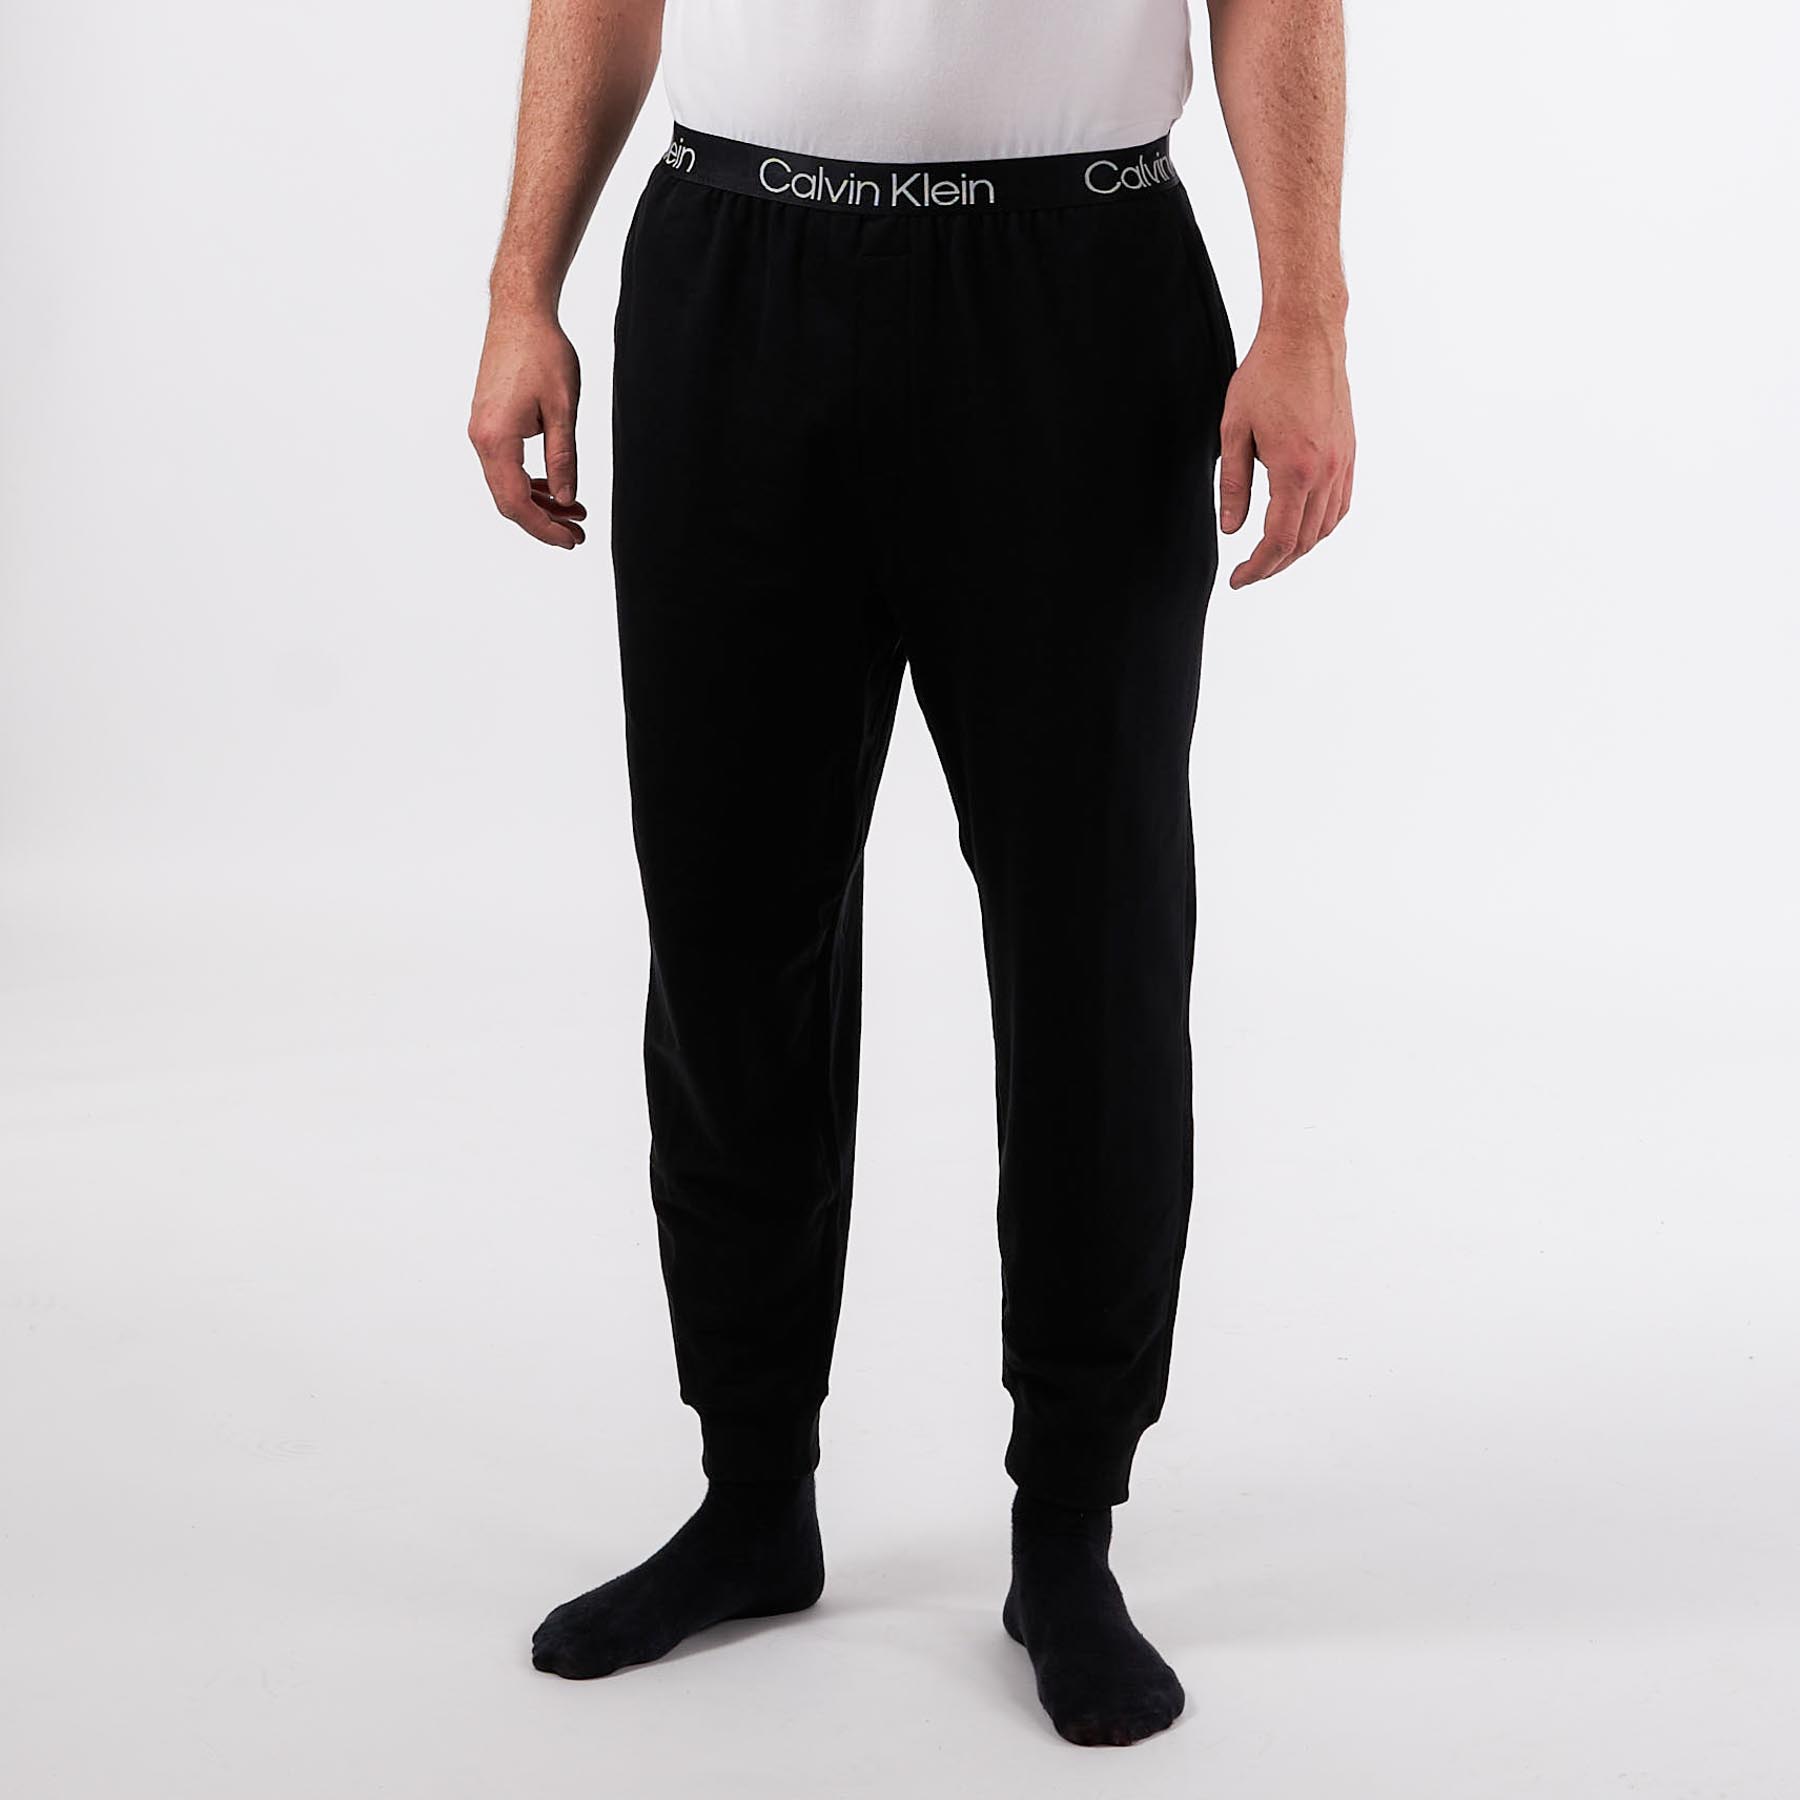 Calvin Klein - Jogger - Bukser til herre - Sort - L Sort ▷ DKK